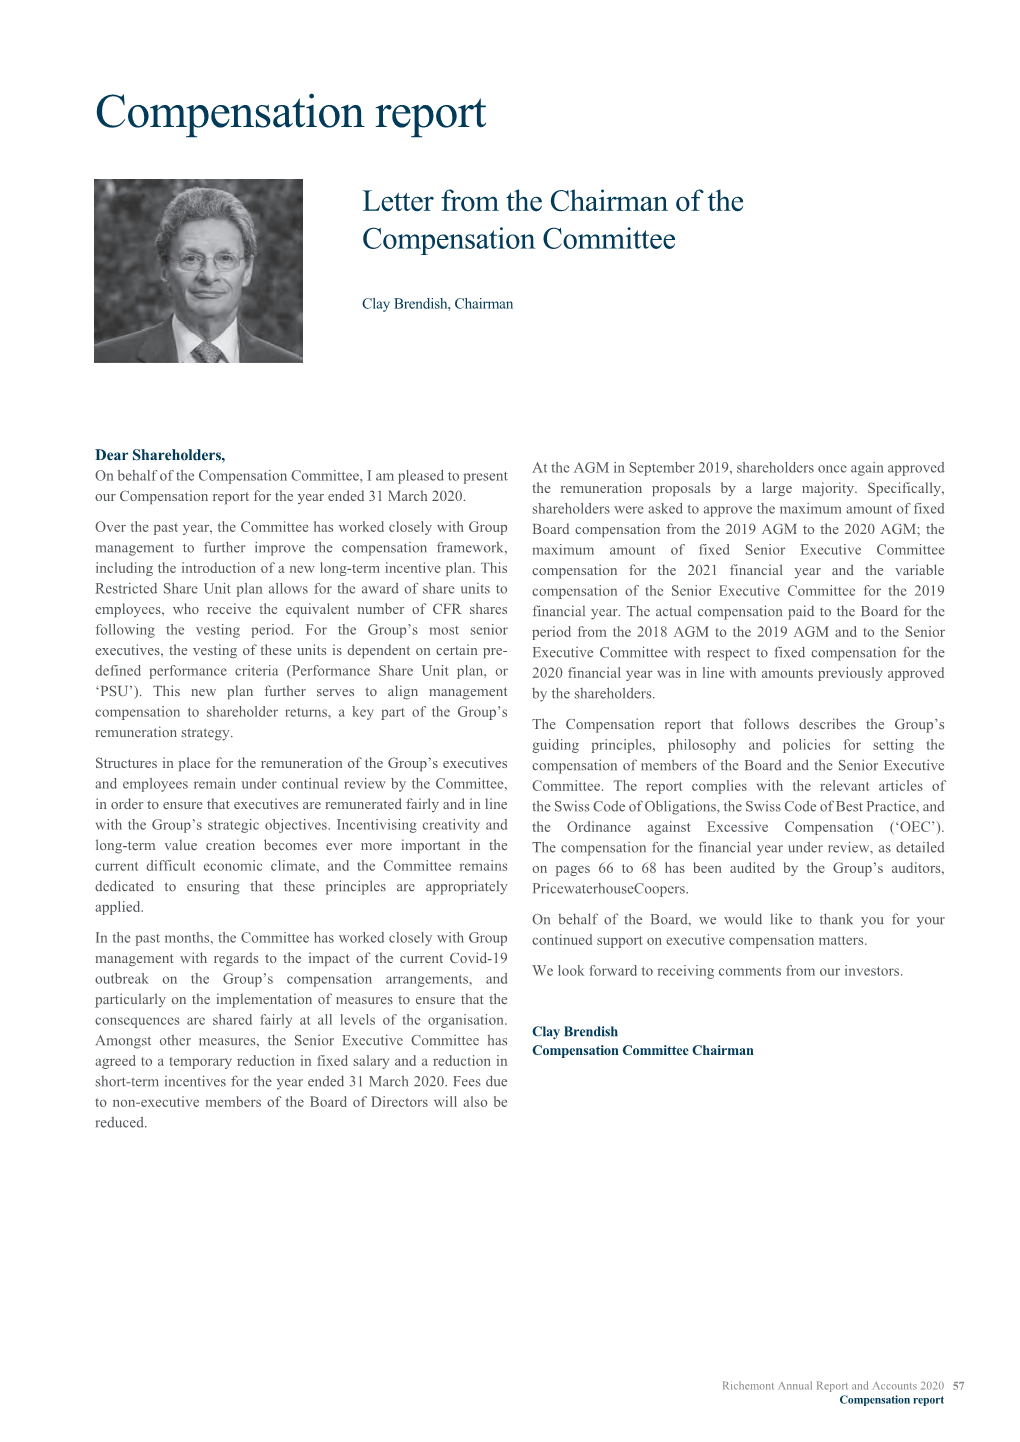 Compensation Report